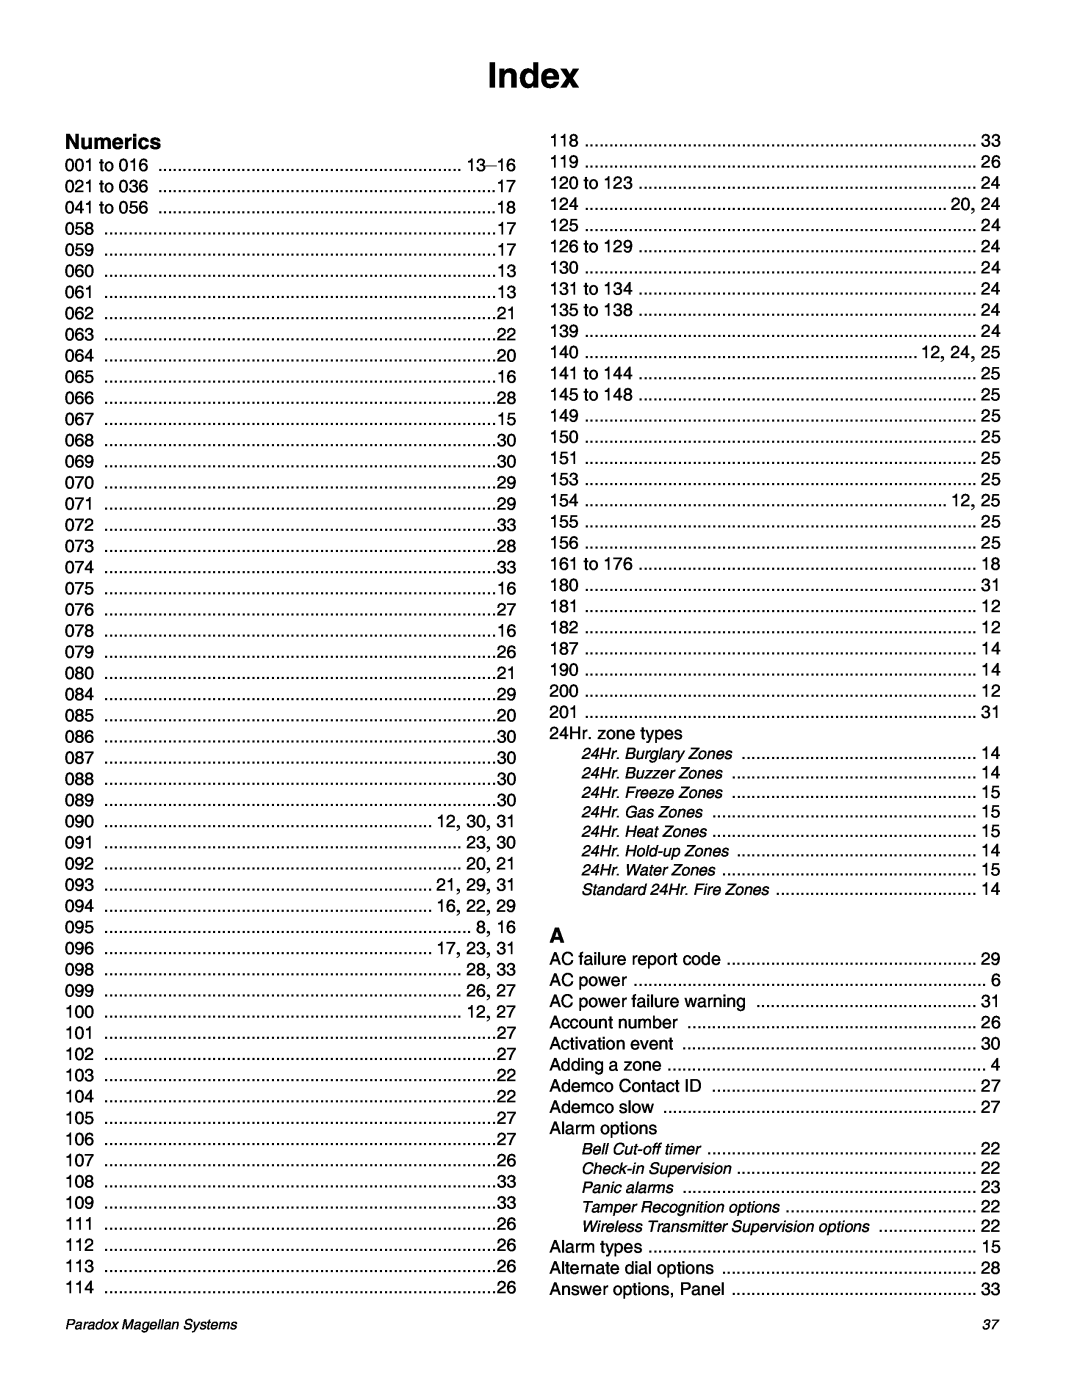 Magellan MG-6060 installation manual Index, Numerics 